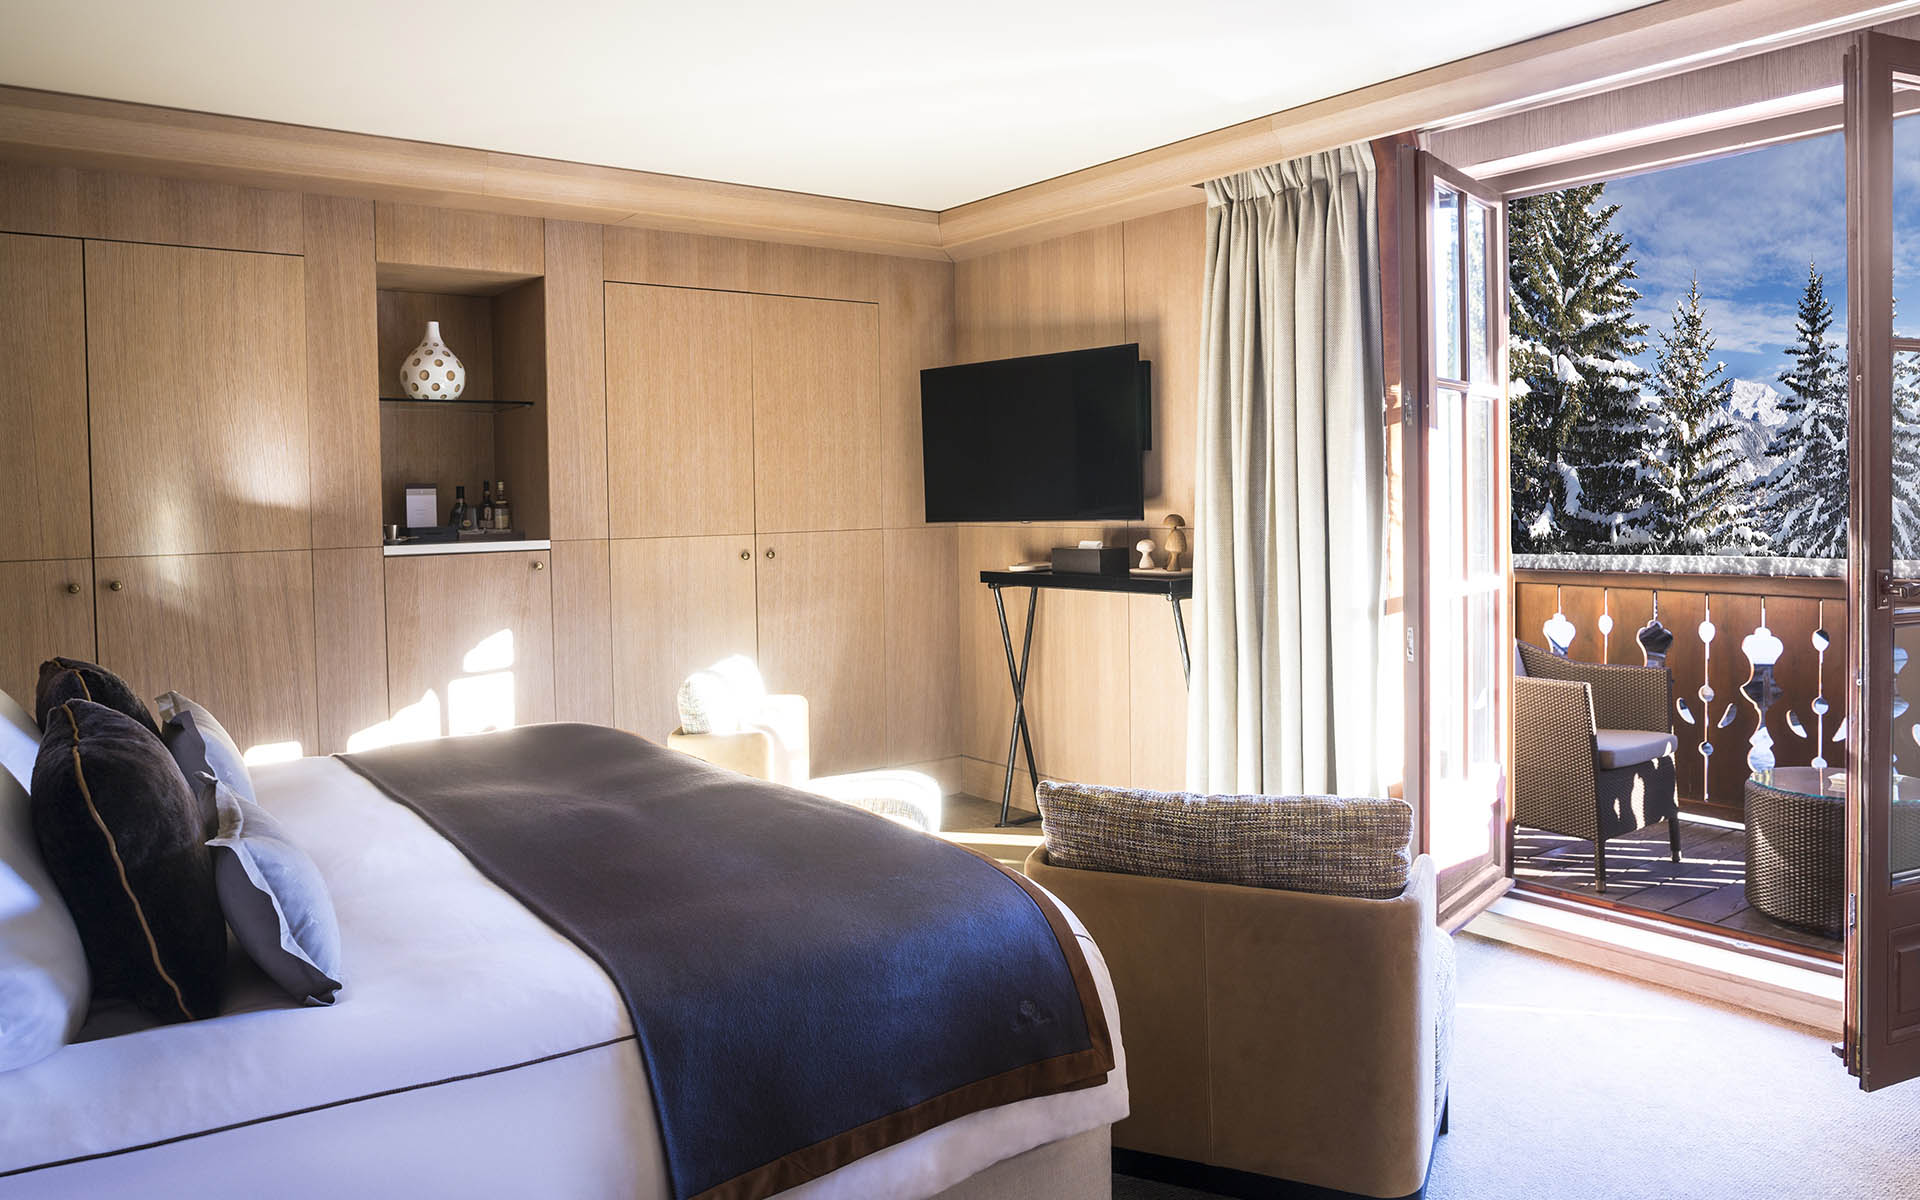 Luxury hotel, Cheval Blanc, Courchevel, France - Luxury Dream Hotels